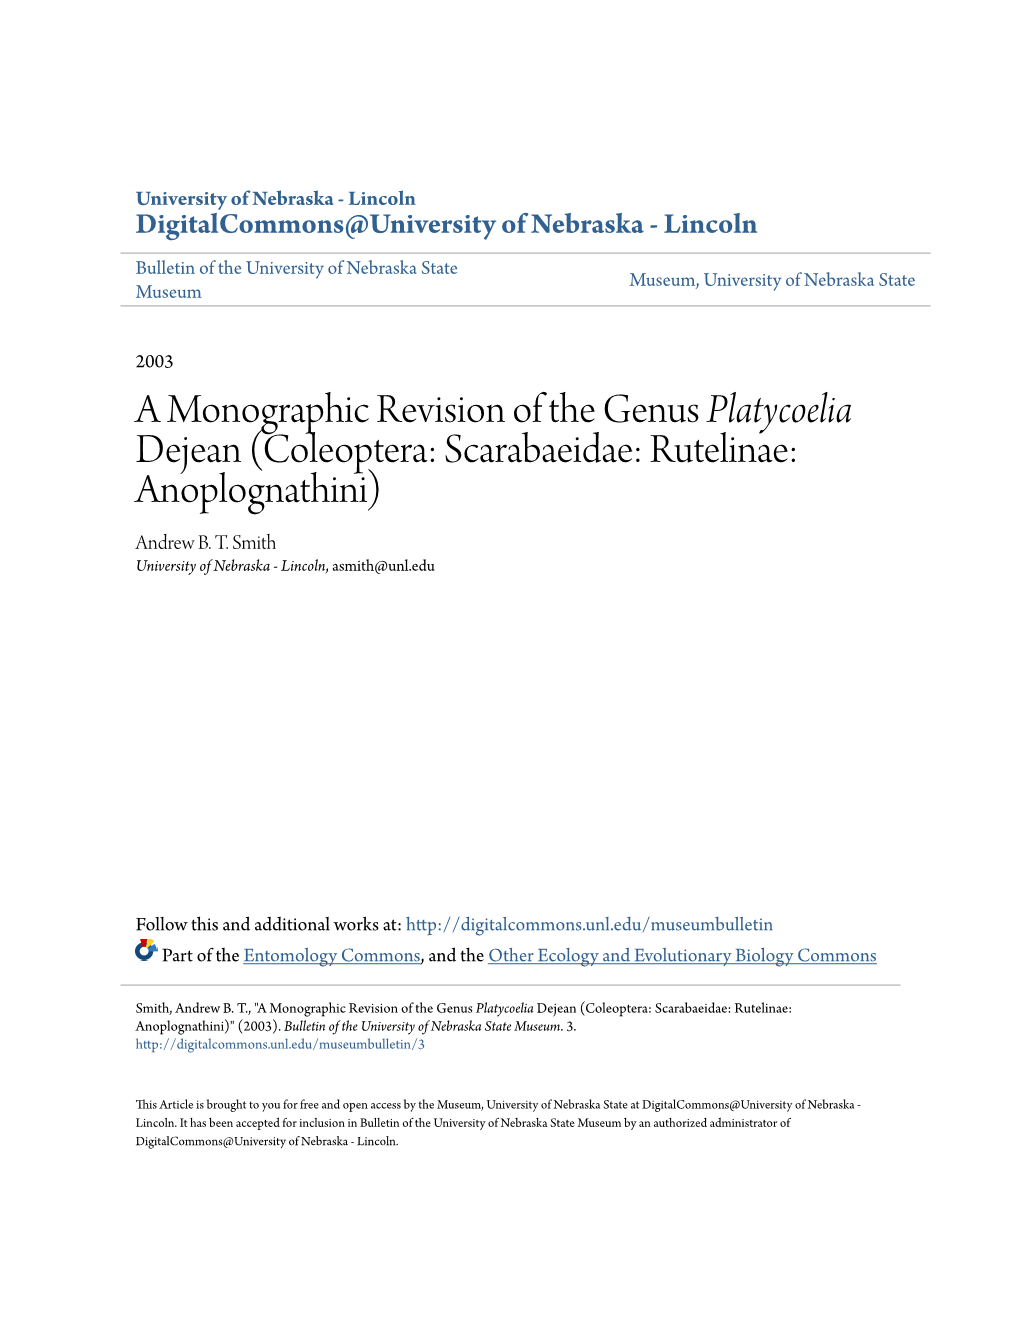 A Monographic Revision of the Genus Platycoelia Dejean (Coleoptera: Scarabaeidae: Rutelinae: Anoplognathini) Andrew B